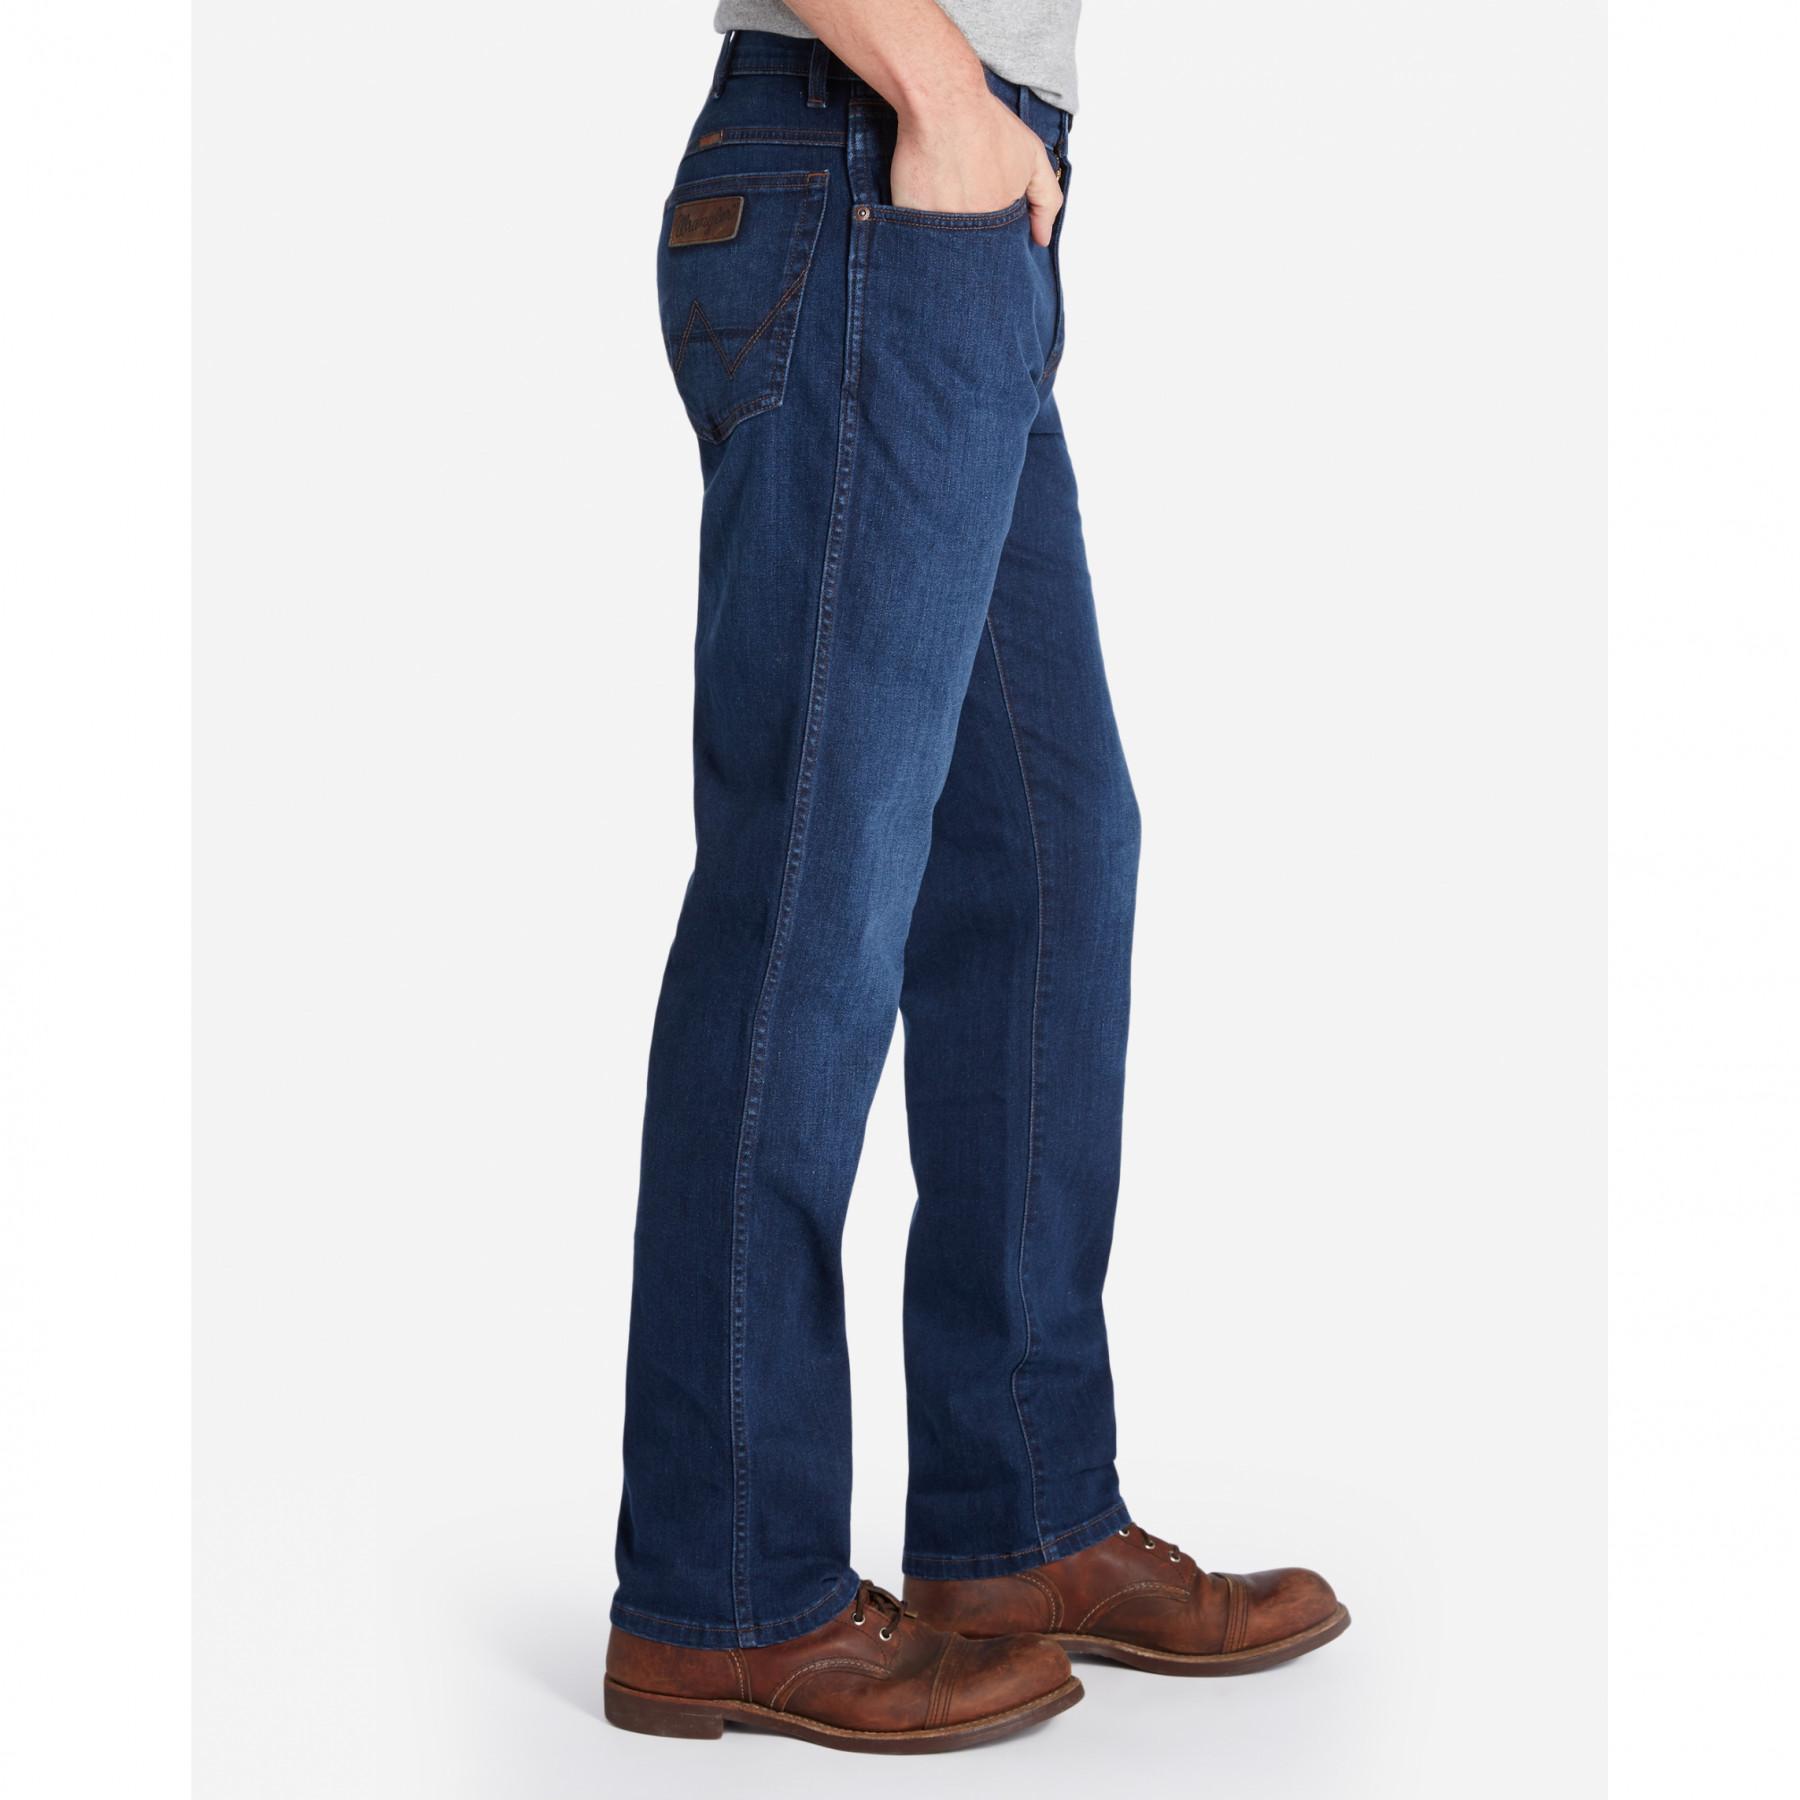 Jeans Wrangler texas stretch classic